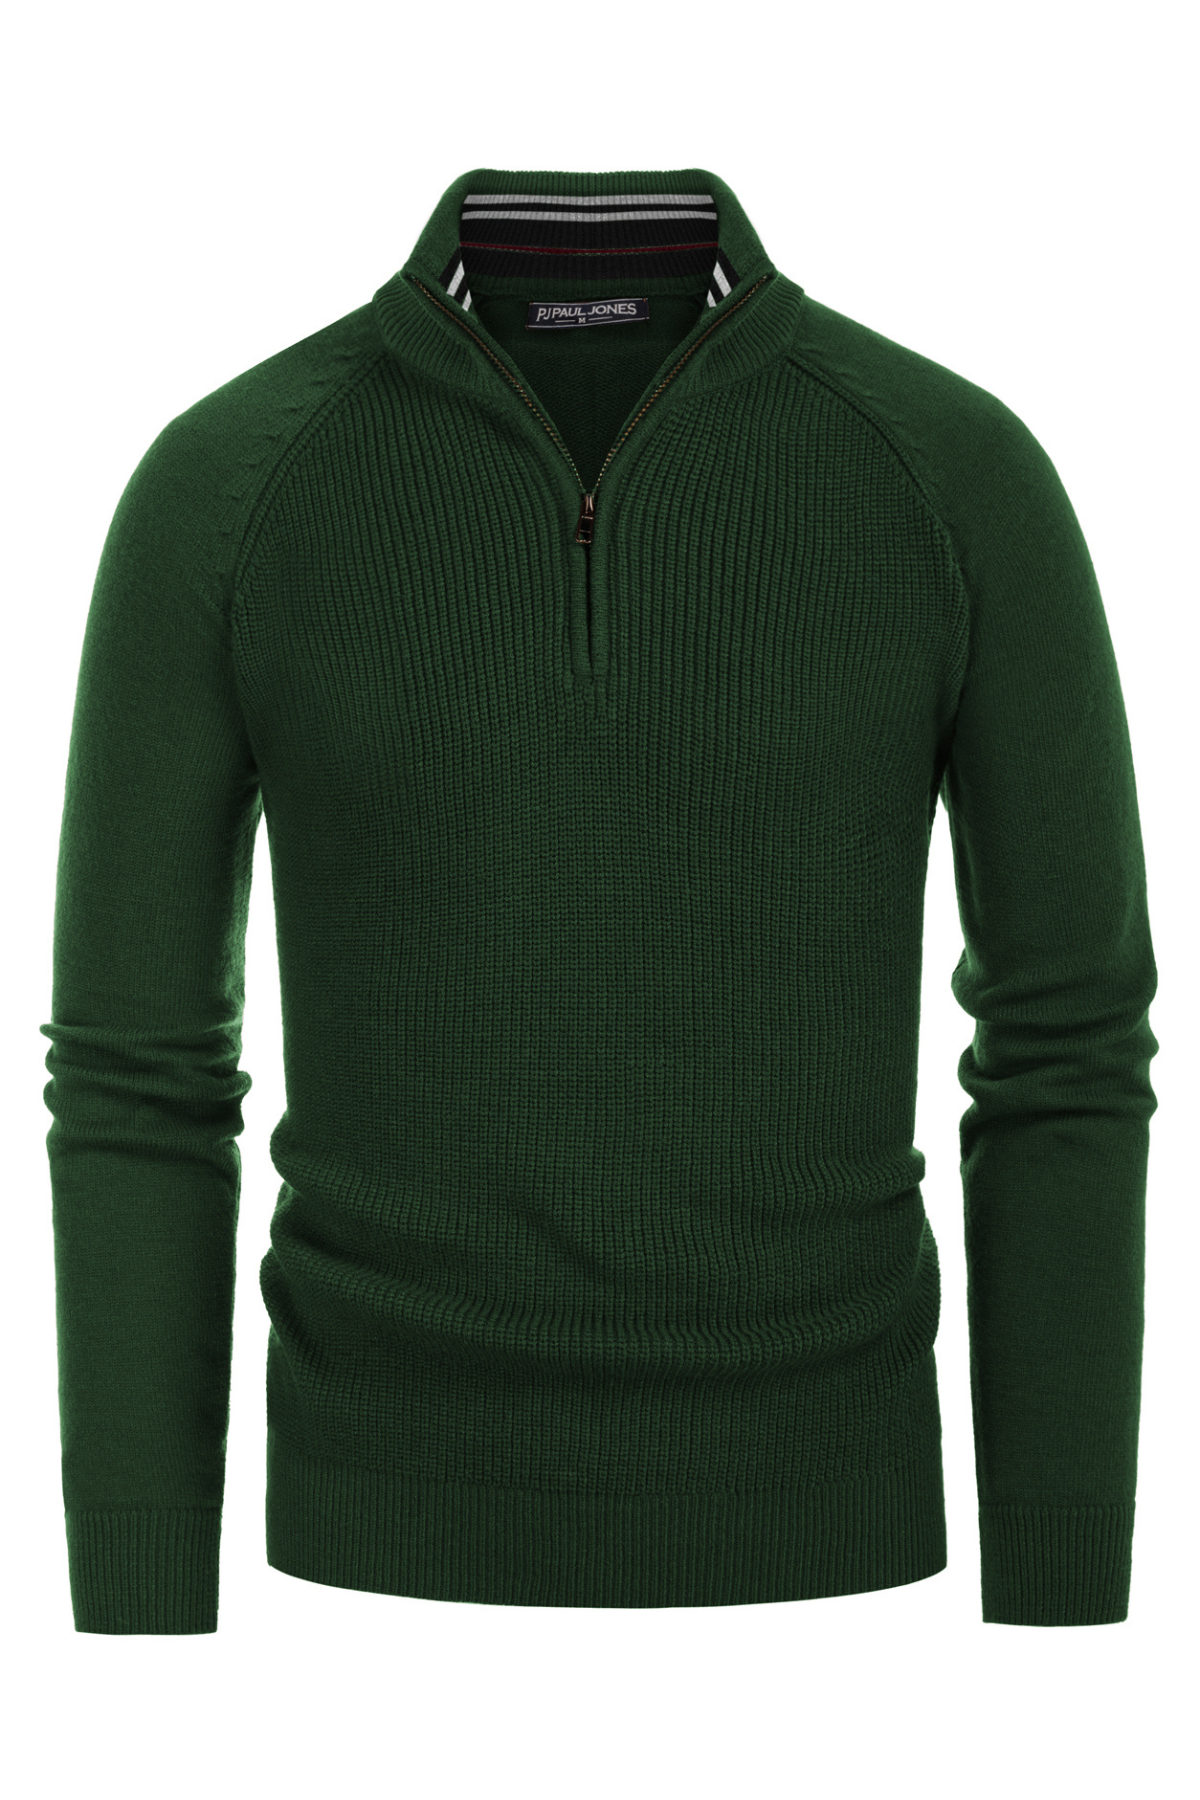 Men's Quarter Zip Sweater Casual Mock Neck Pullover Slim Fit Knit